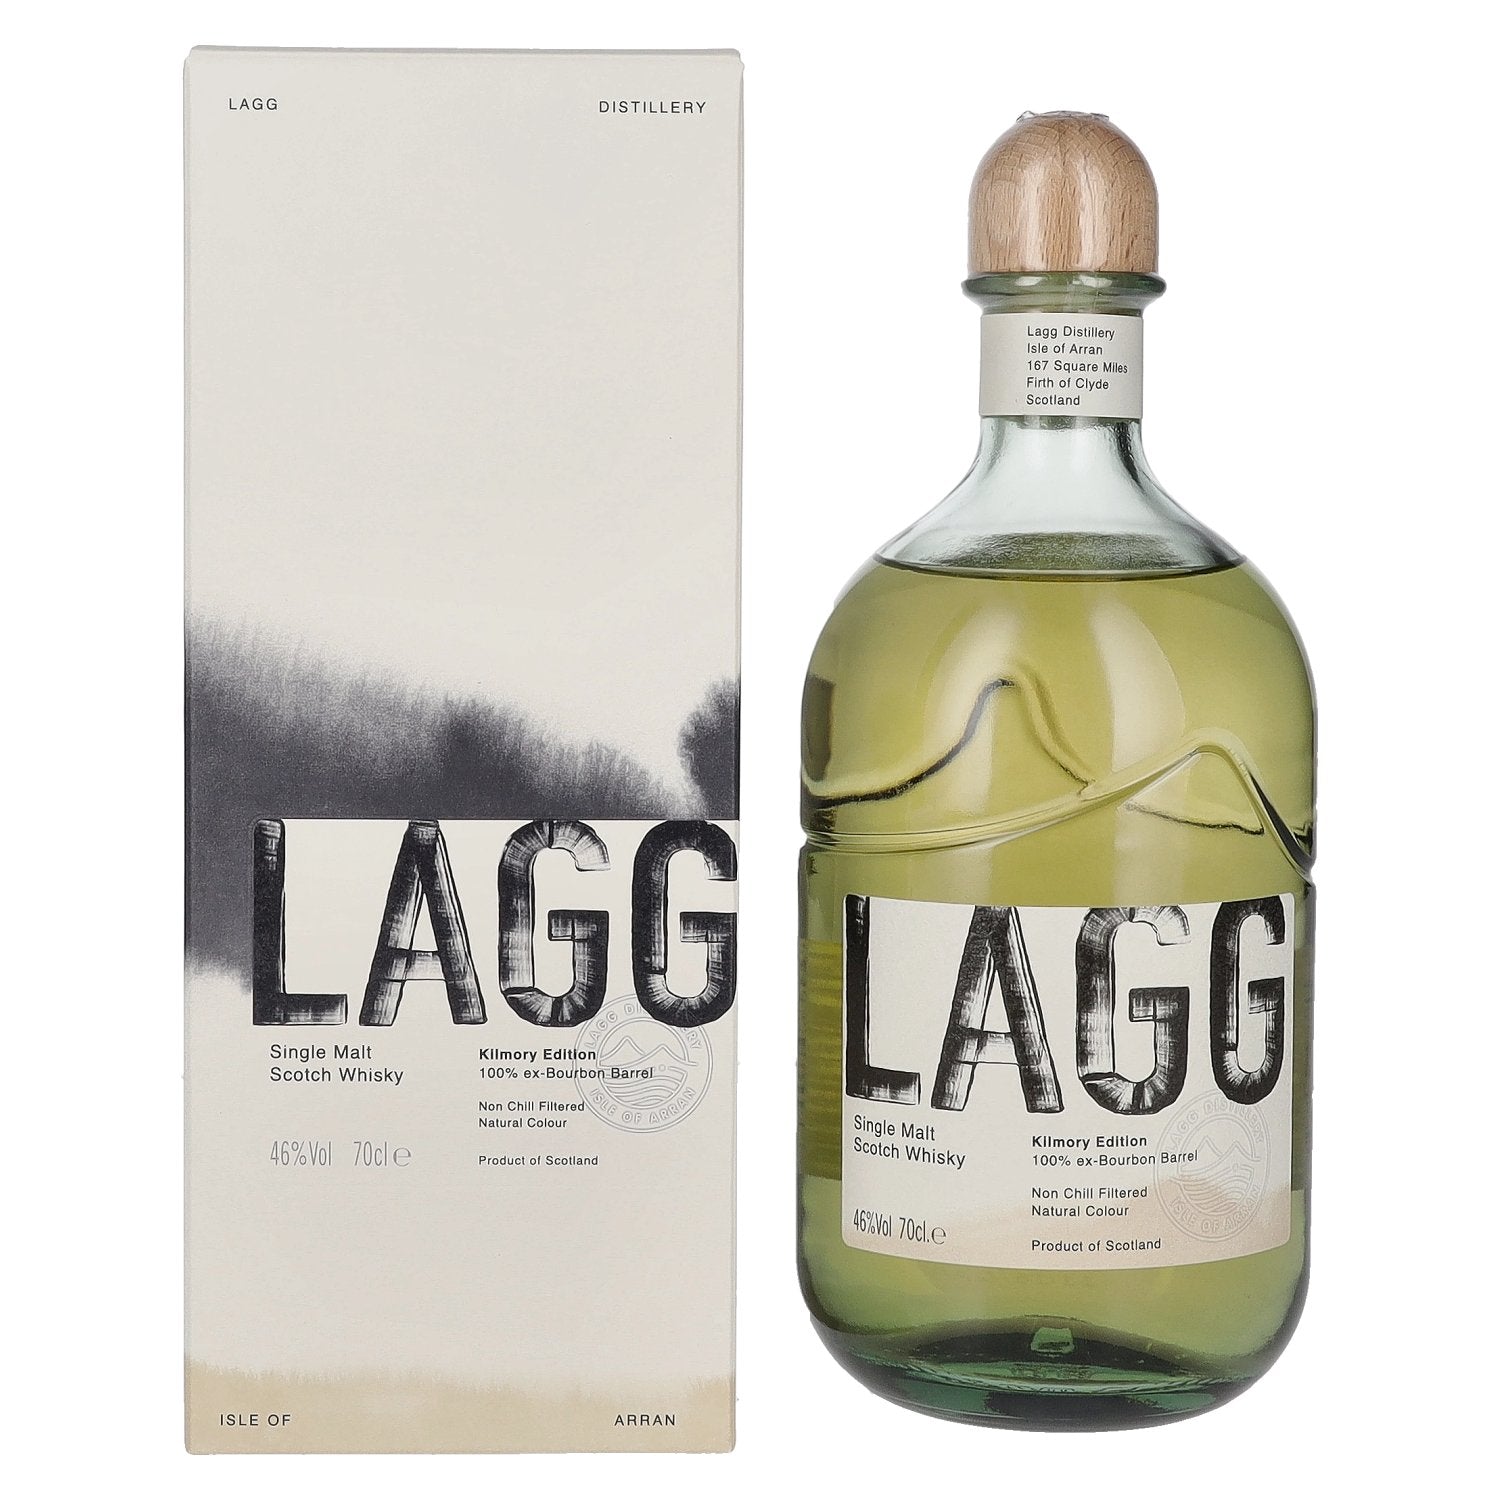 LAGG Single Malt Scotch Whisky Kilmory Edition 46% Vol. 0,7l in Giftbox